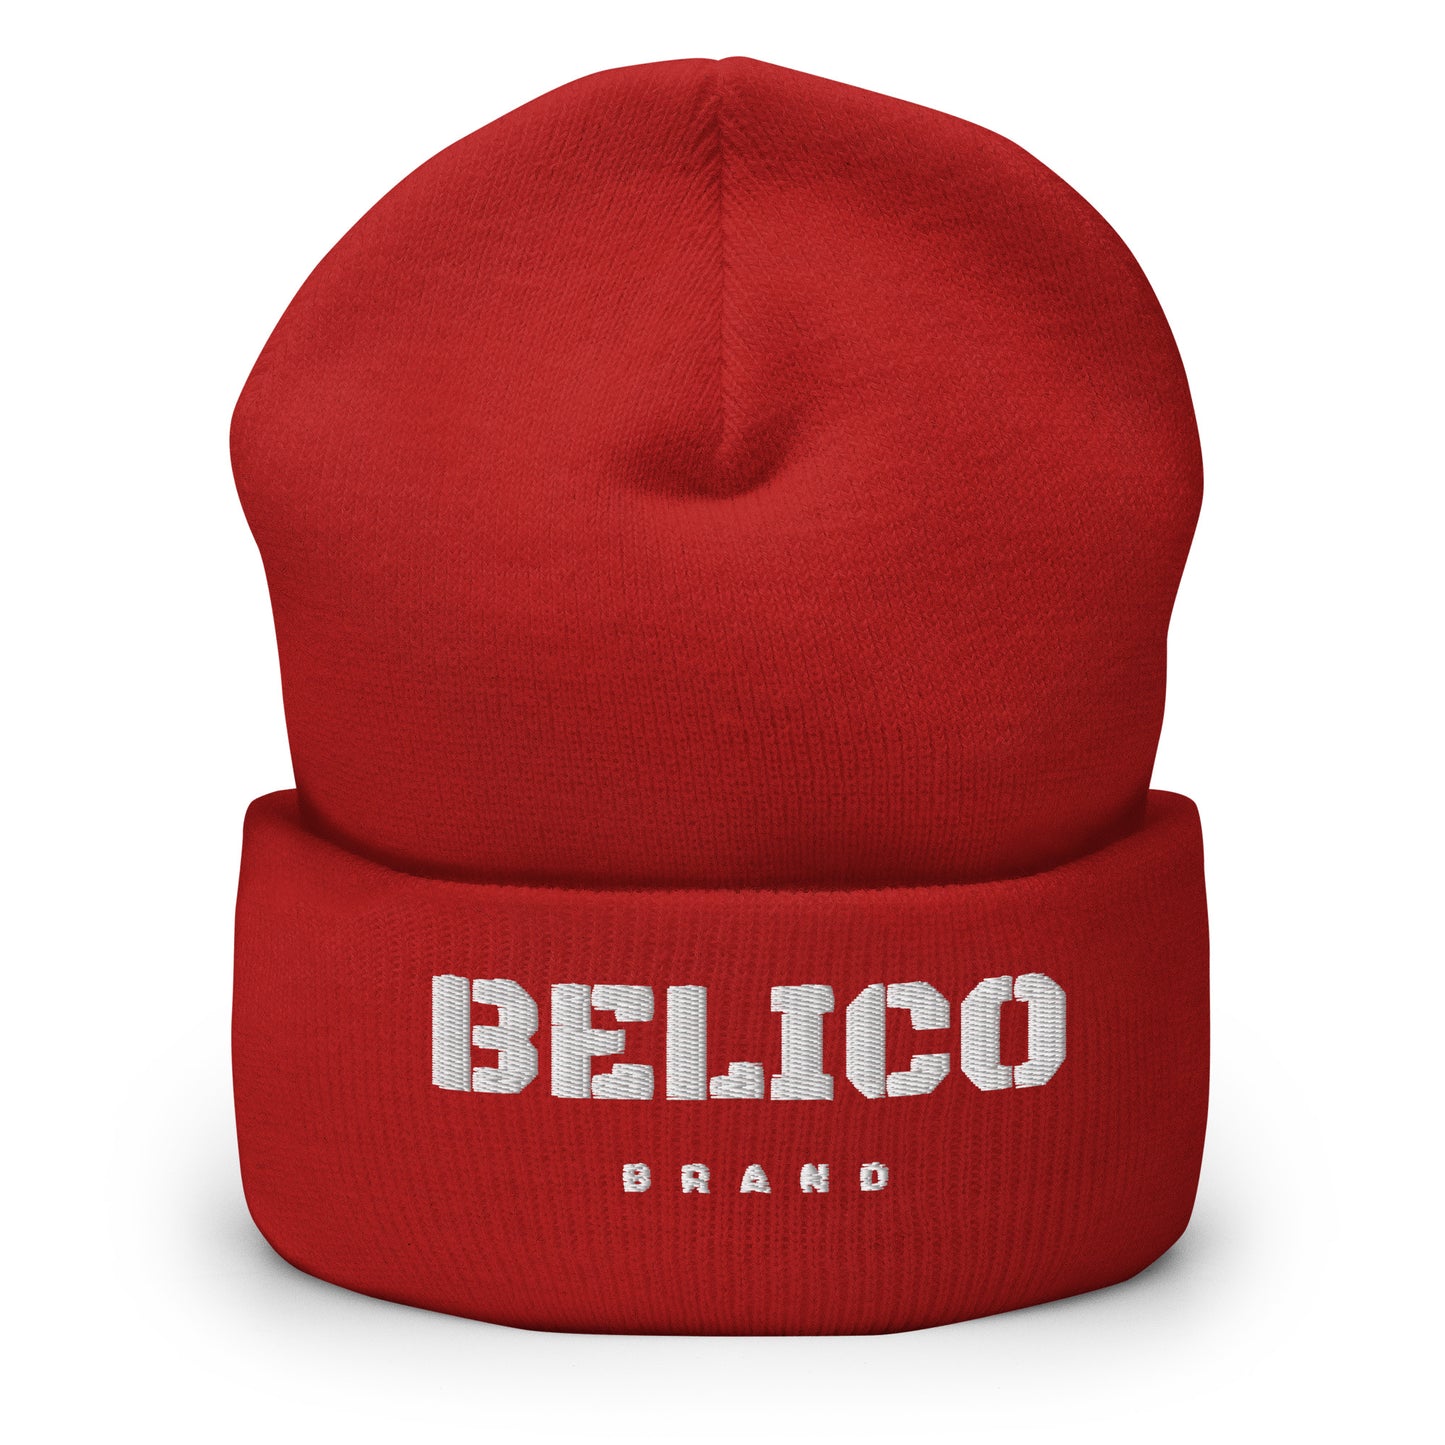 Belico Brand Beanie